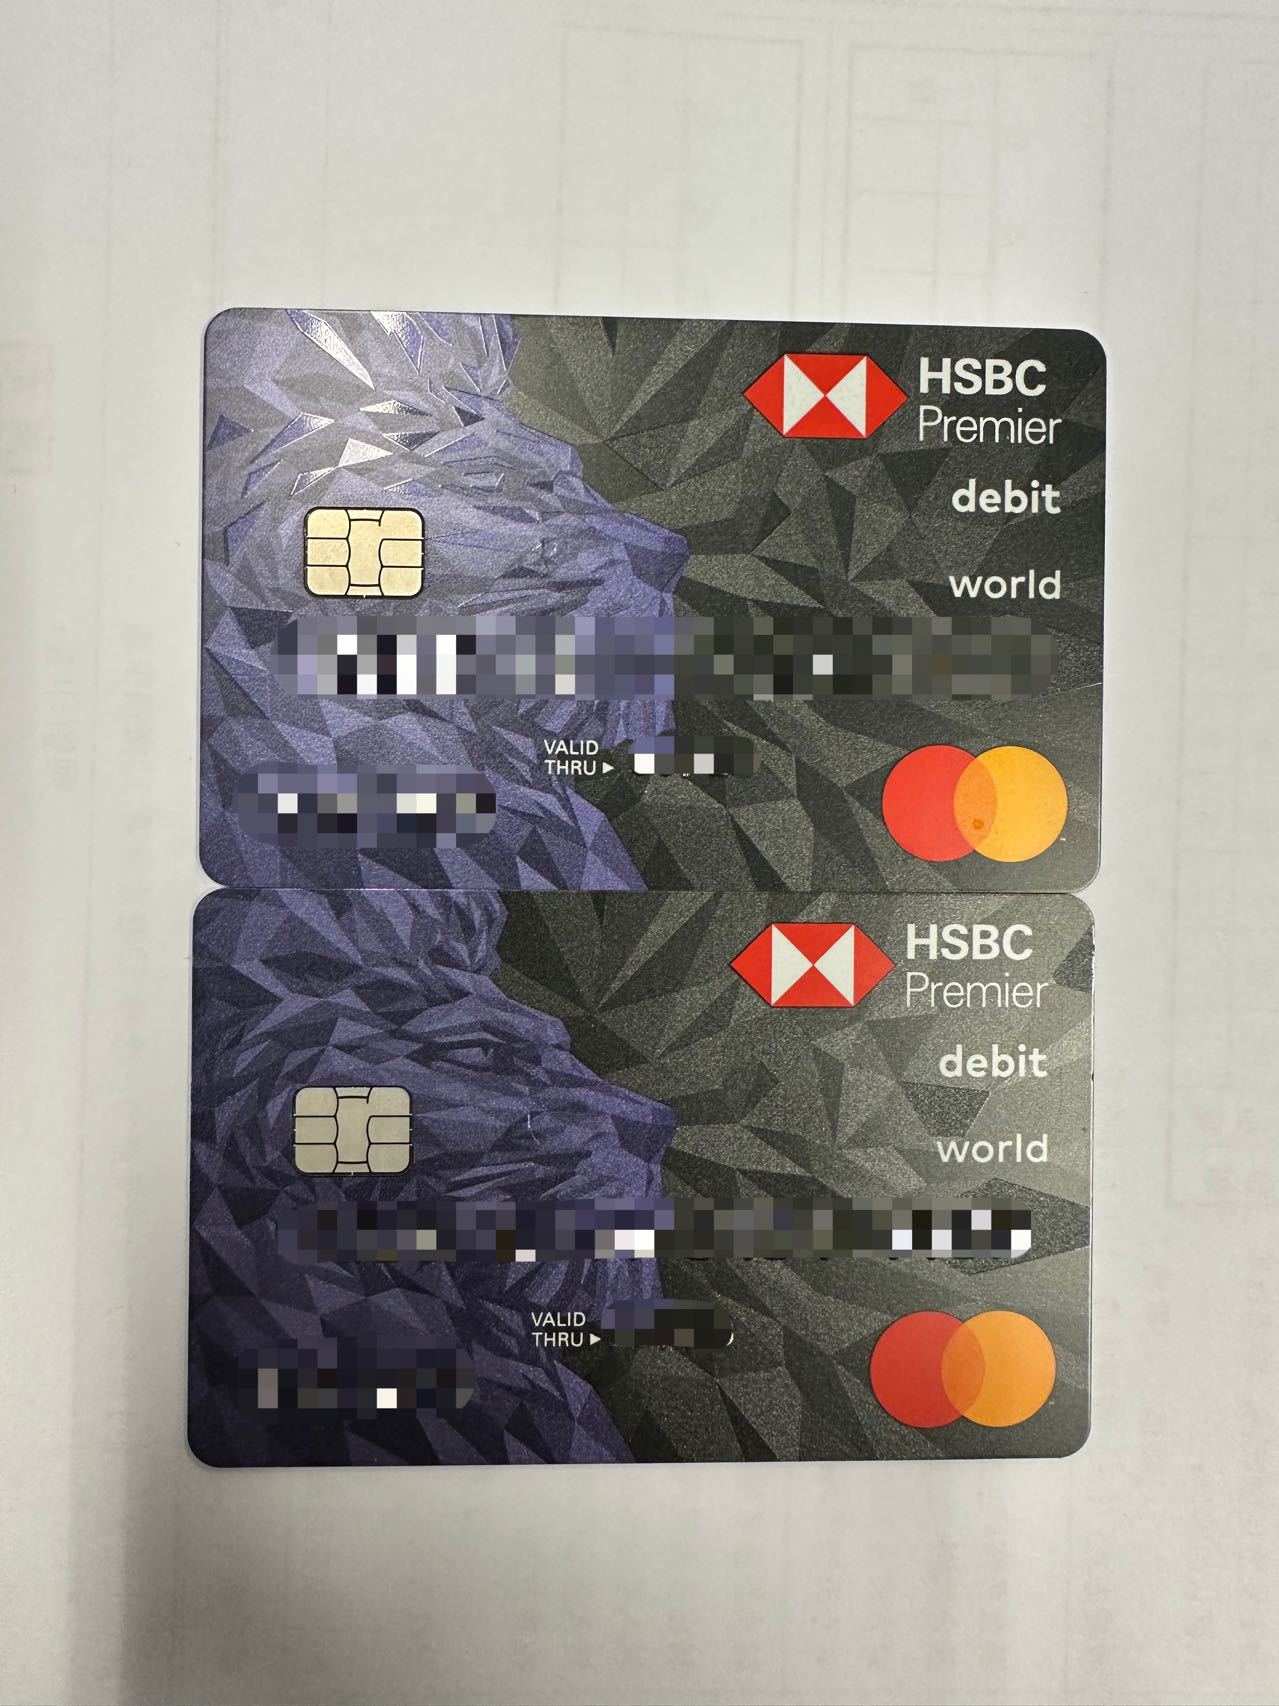 HSBC us debit card